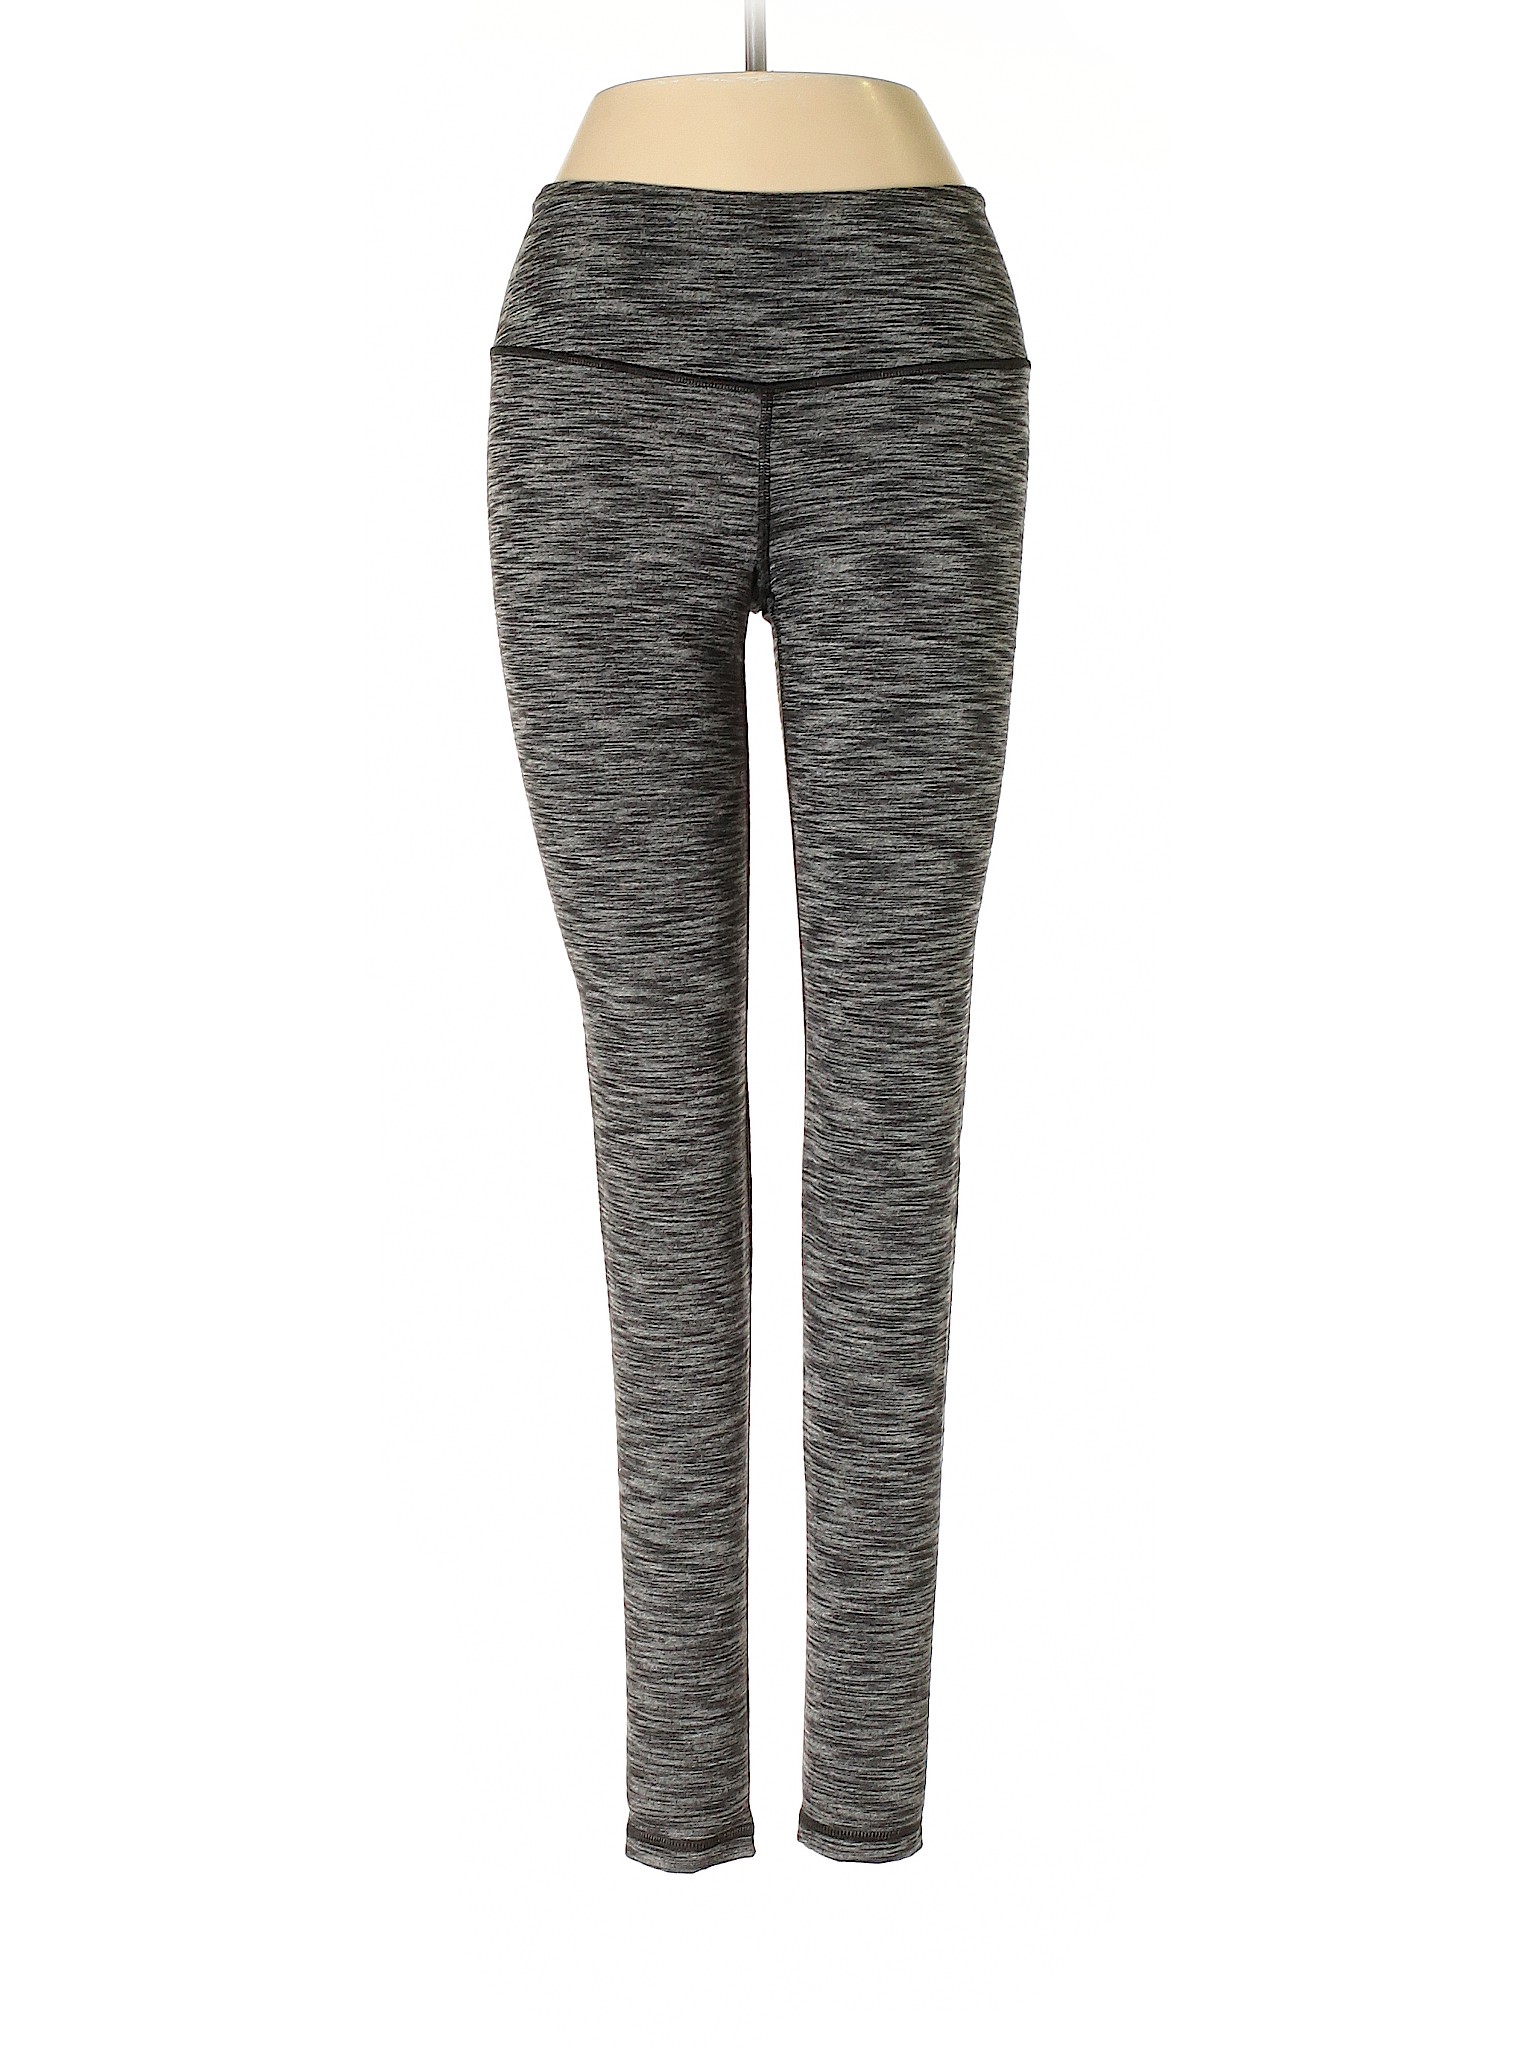 VSX Sport Women Gray Active Pants XS | eBay